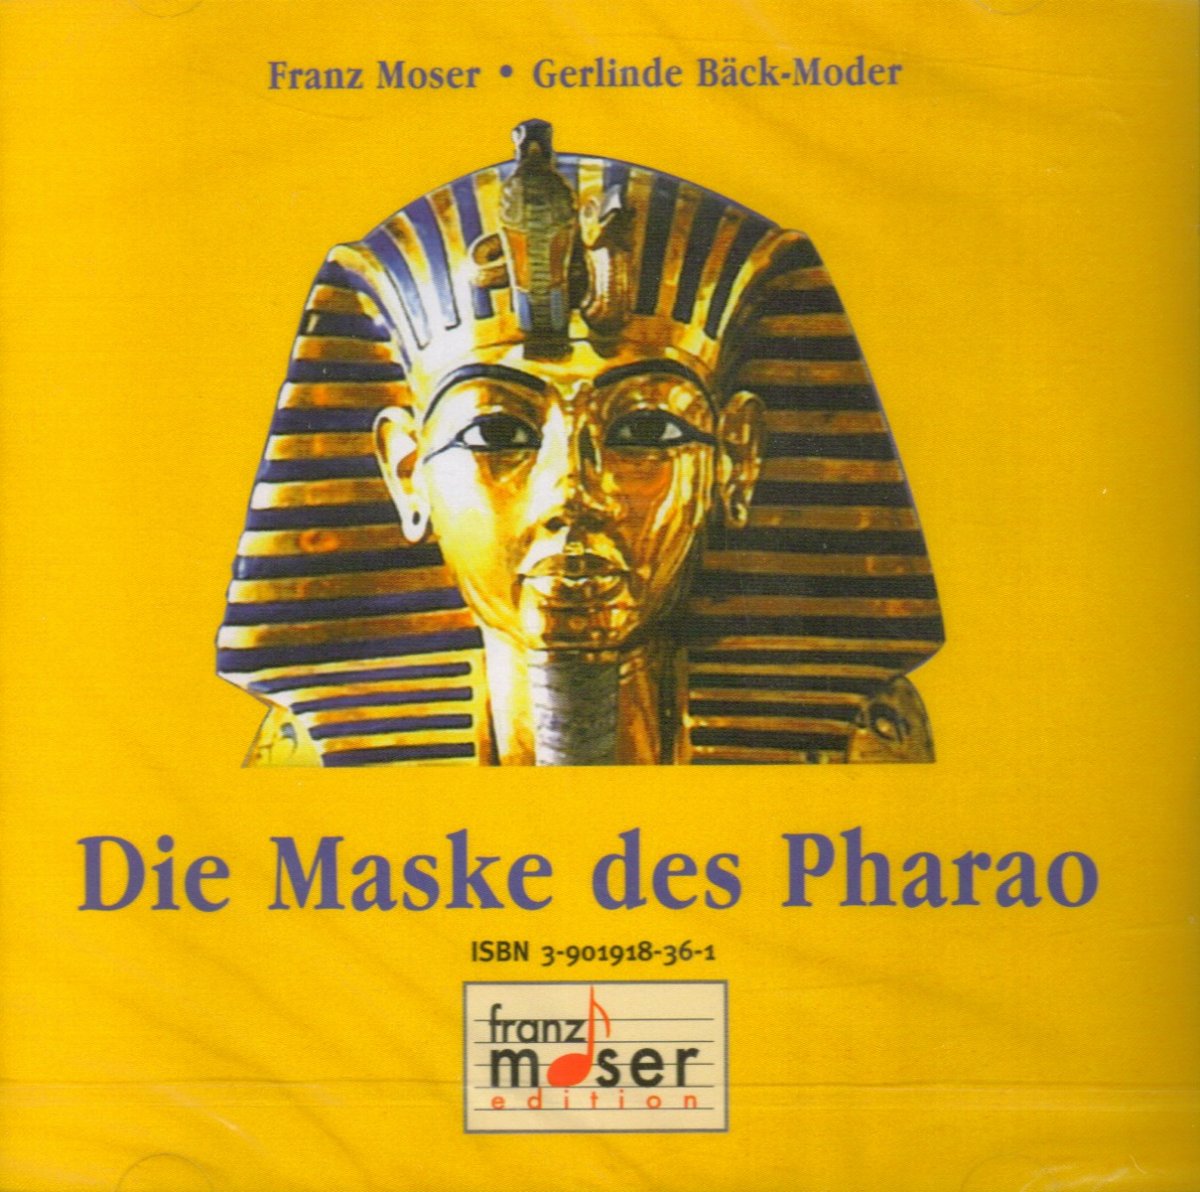 Maske des Pharao, Die - cliquer ici